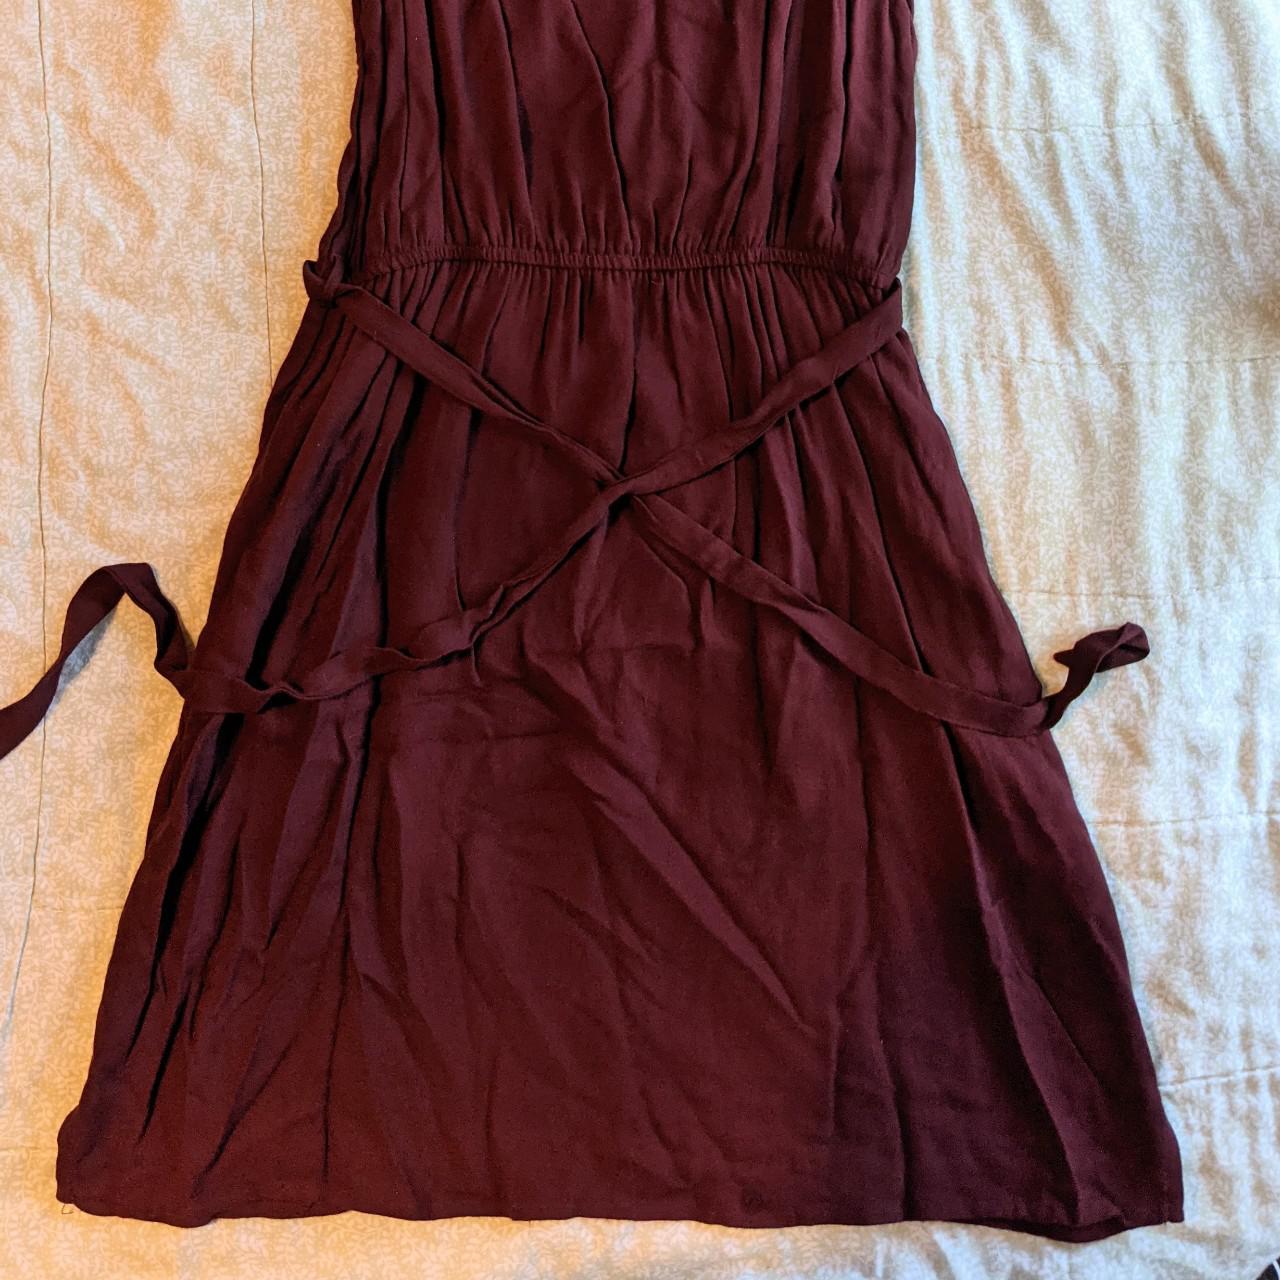 Product Image 2 - Burgundy mid length dress. A